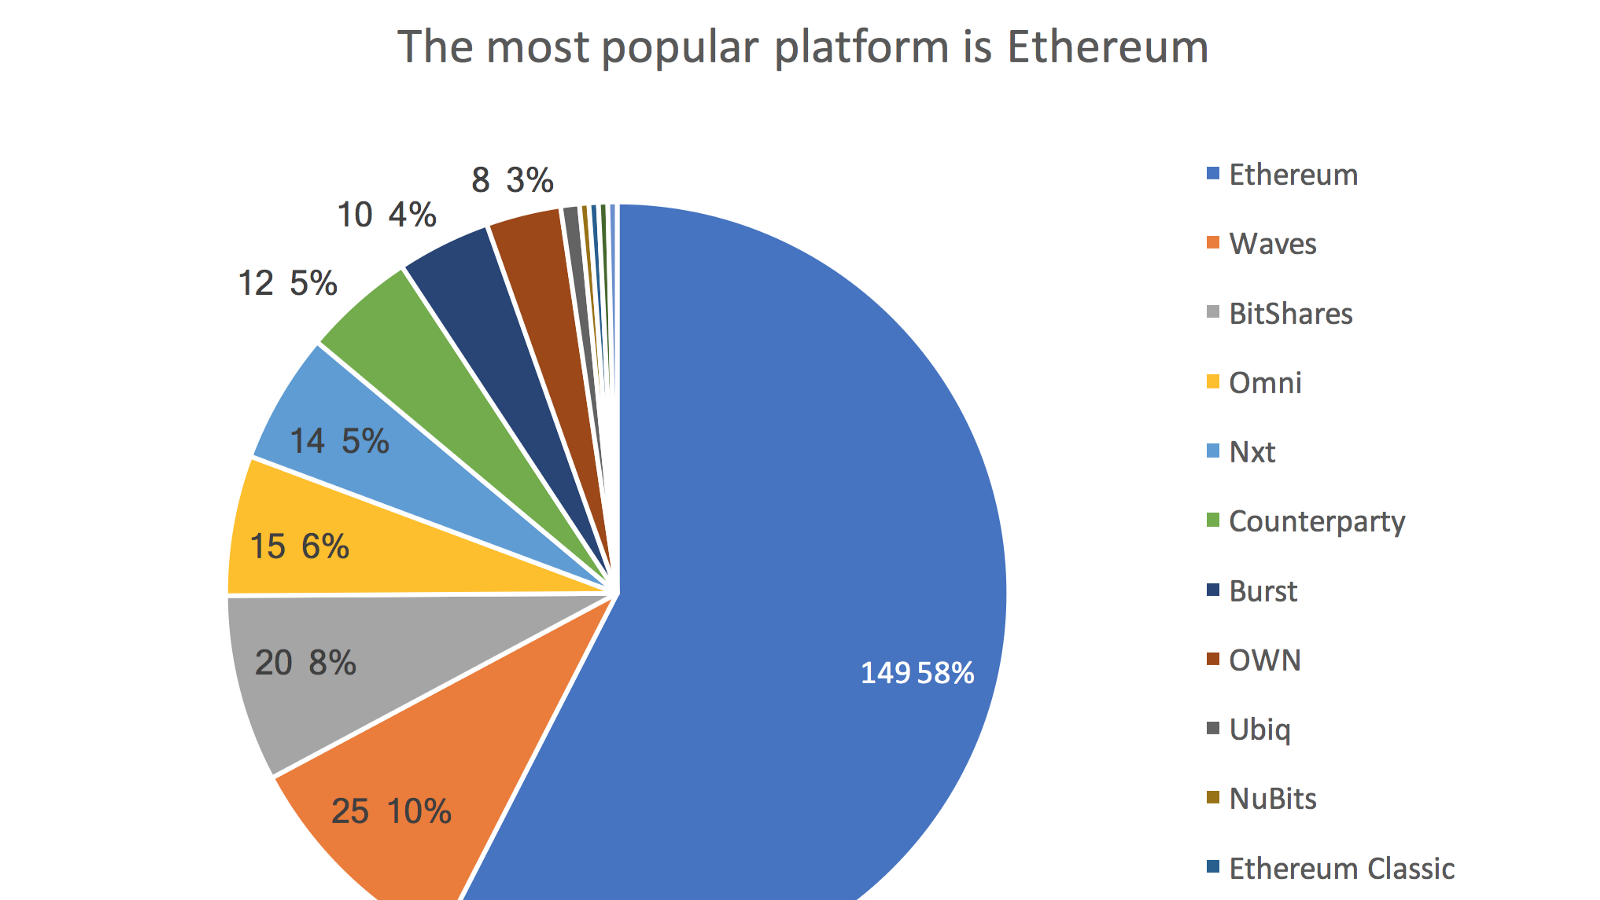 Ethereum is the most popular ICO platform